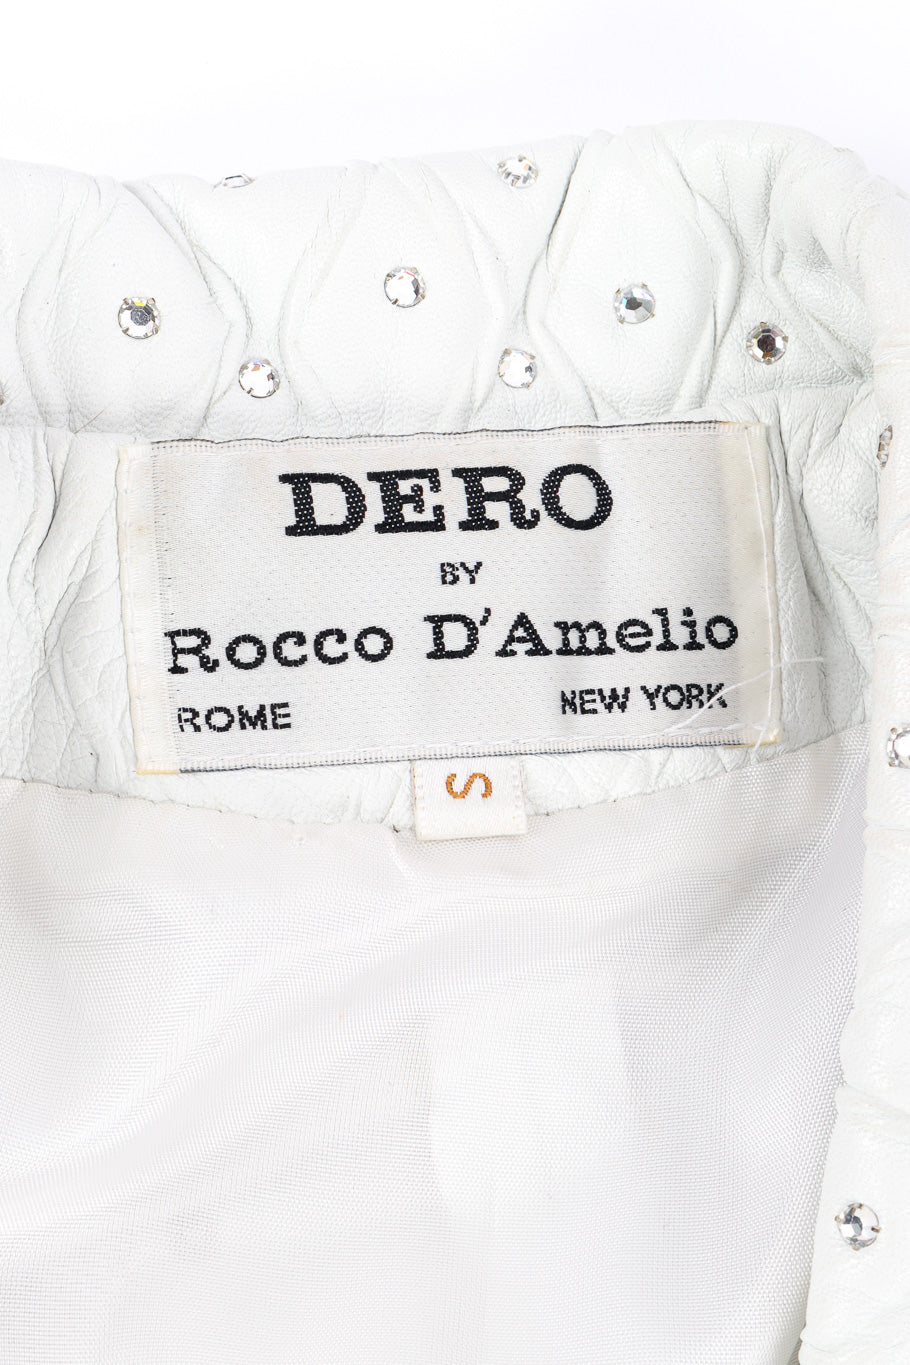 Cropped Rhinestone Embossed Leather Jacket by Dero Enterprises label @recessla